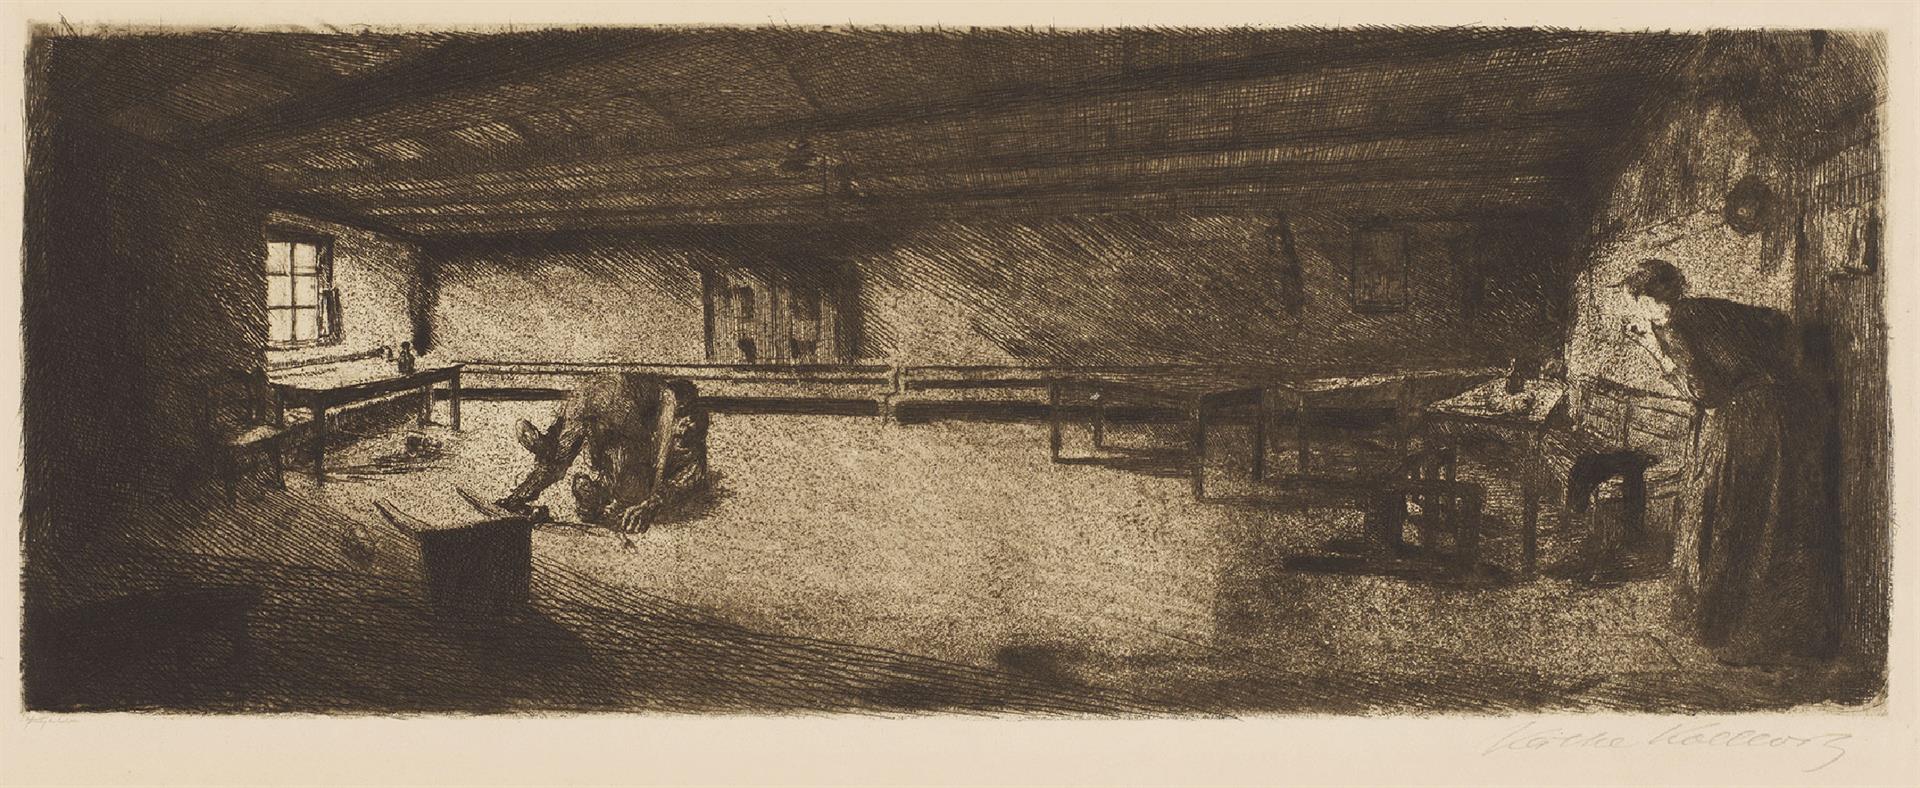 Käthe Kollwitz, scene from Germinal, 1893, line etching, dry-point and emery, Kn 19 III b, Cologne Kollwitz collection © Käthe Kollwitz Museum Köln